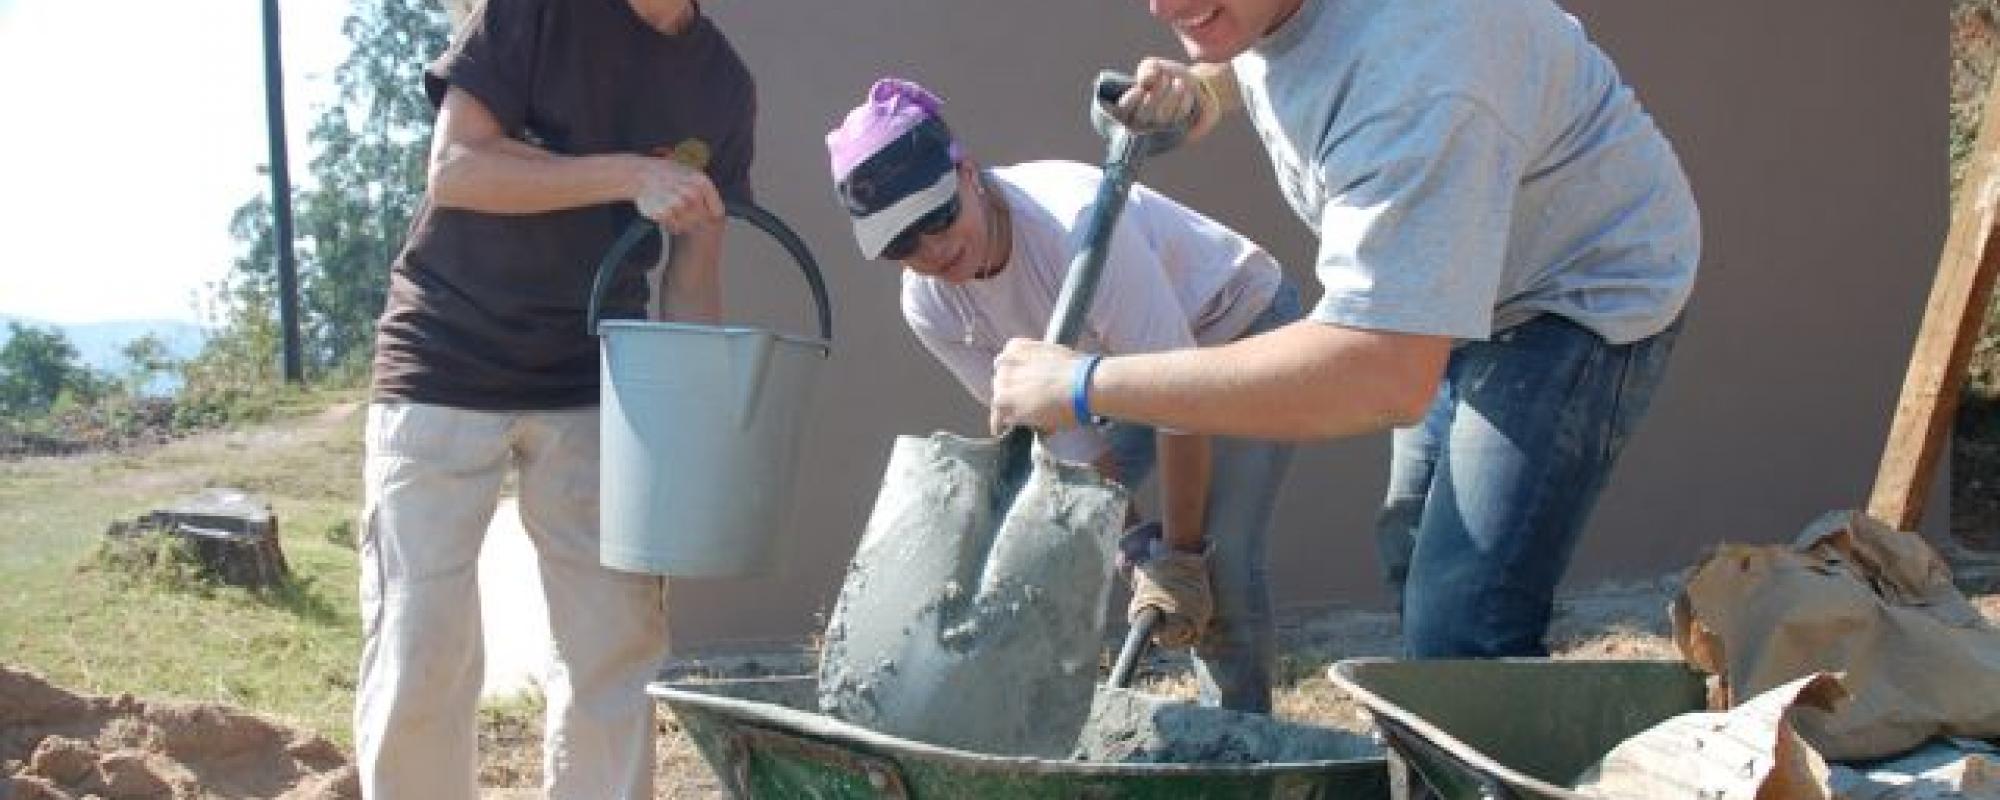 Volunteers mixing concrete